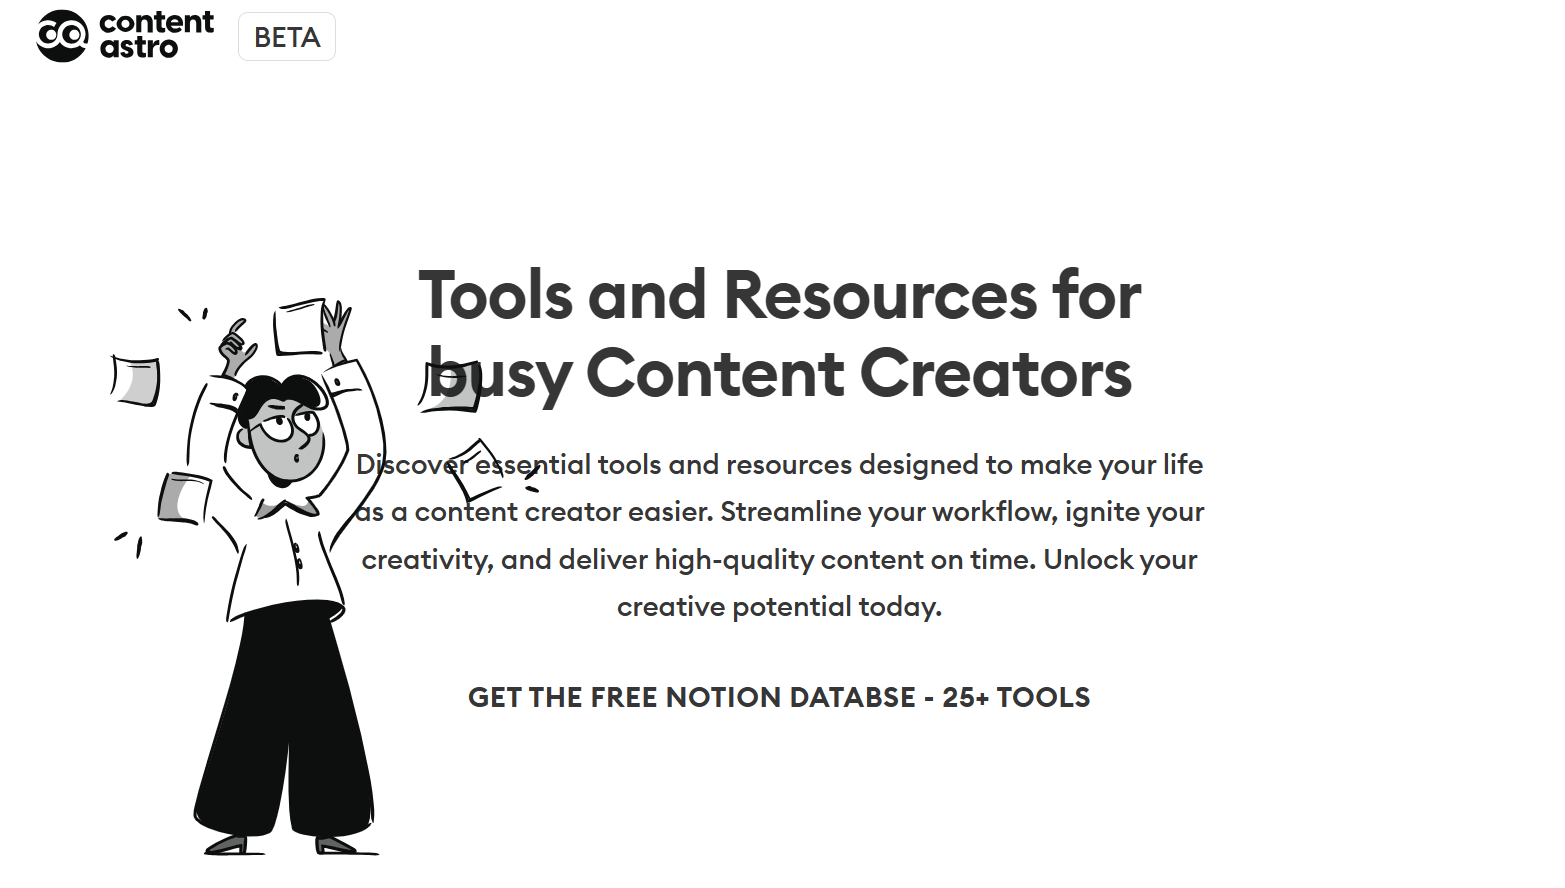 contentastro.com – Essential tools and resources for content creator